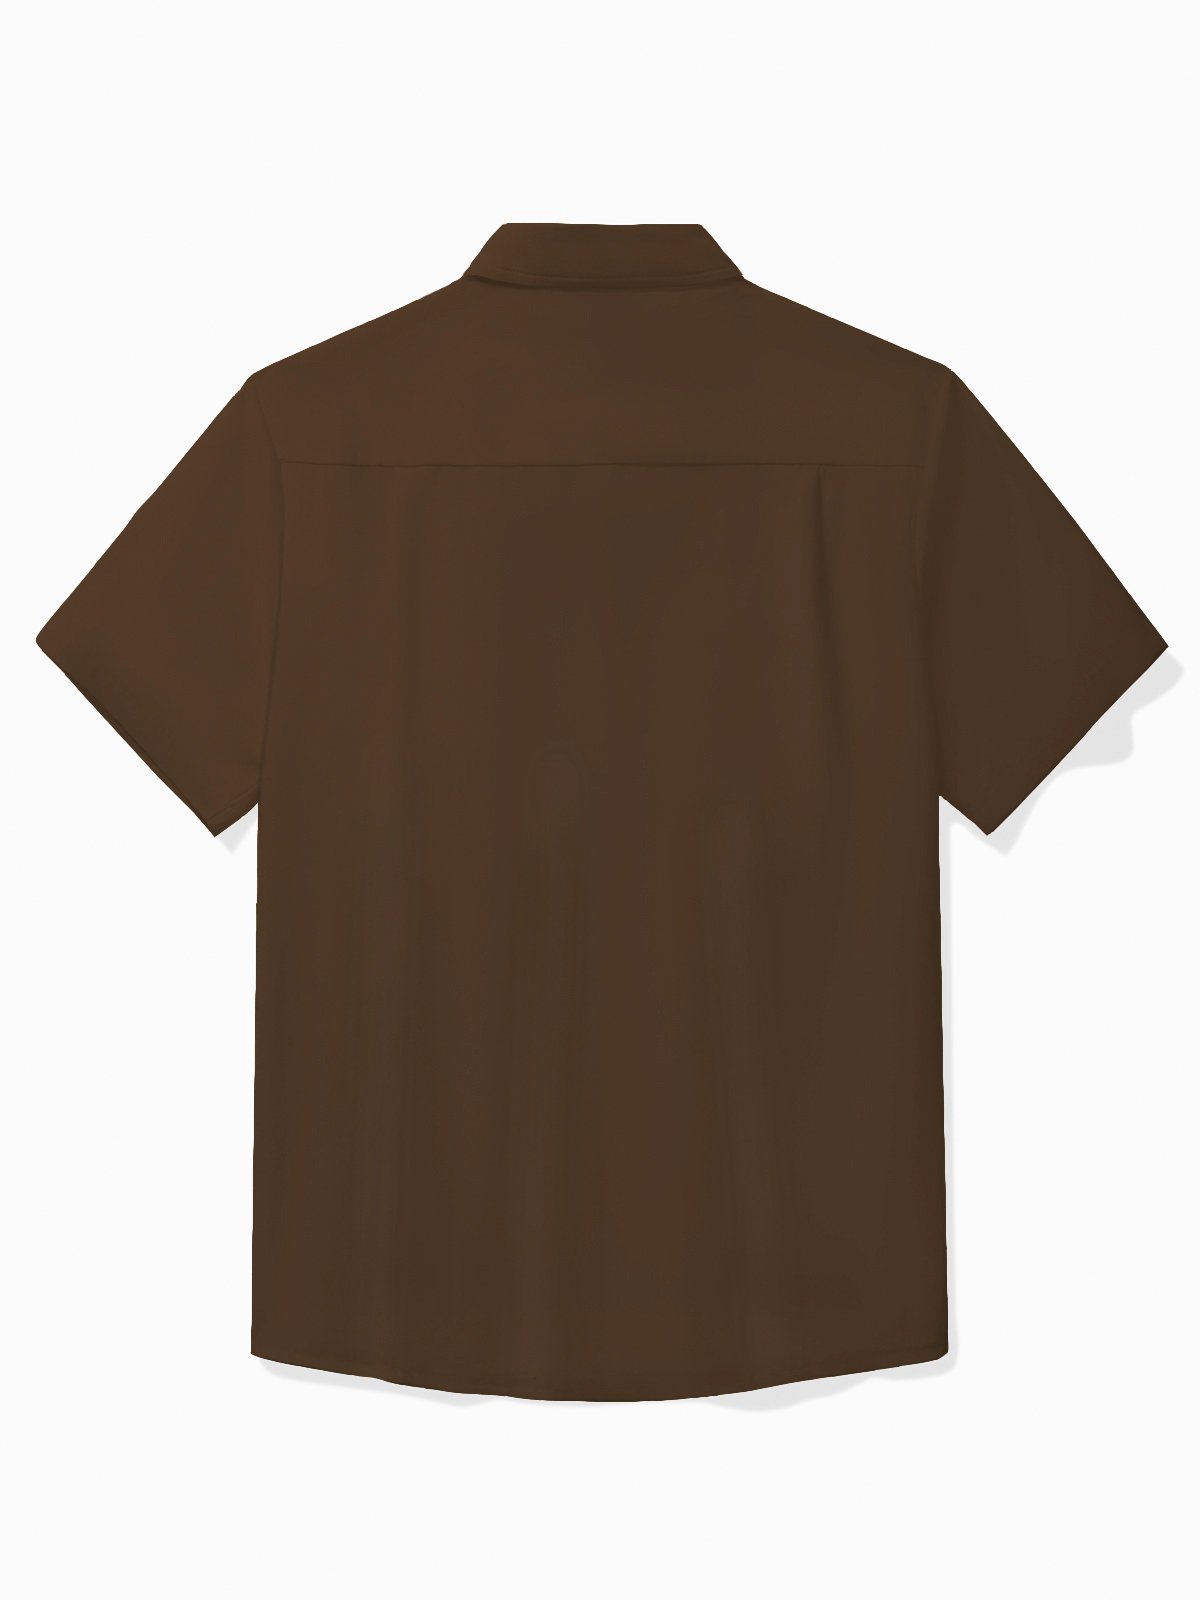 Royaura® Retro Bowling Men's Hawaiian Shirt Cartoon Line Print Pocket Camping Shirt